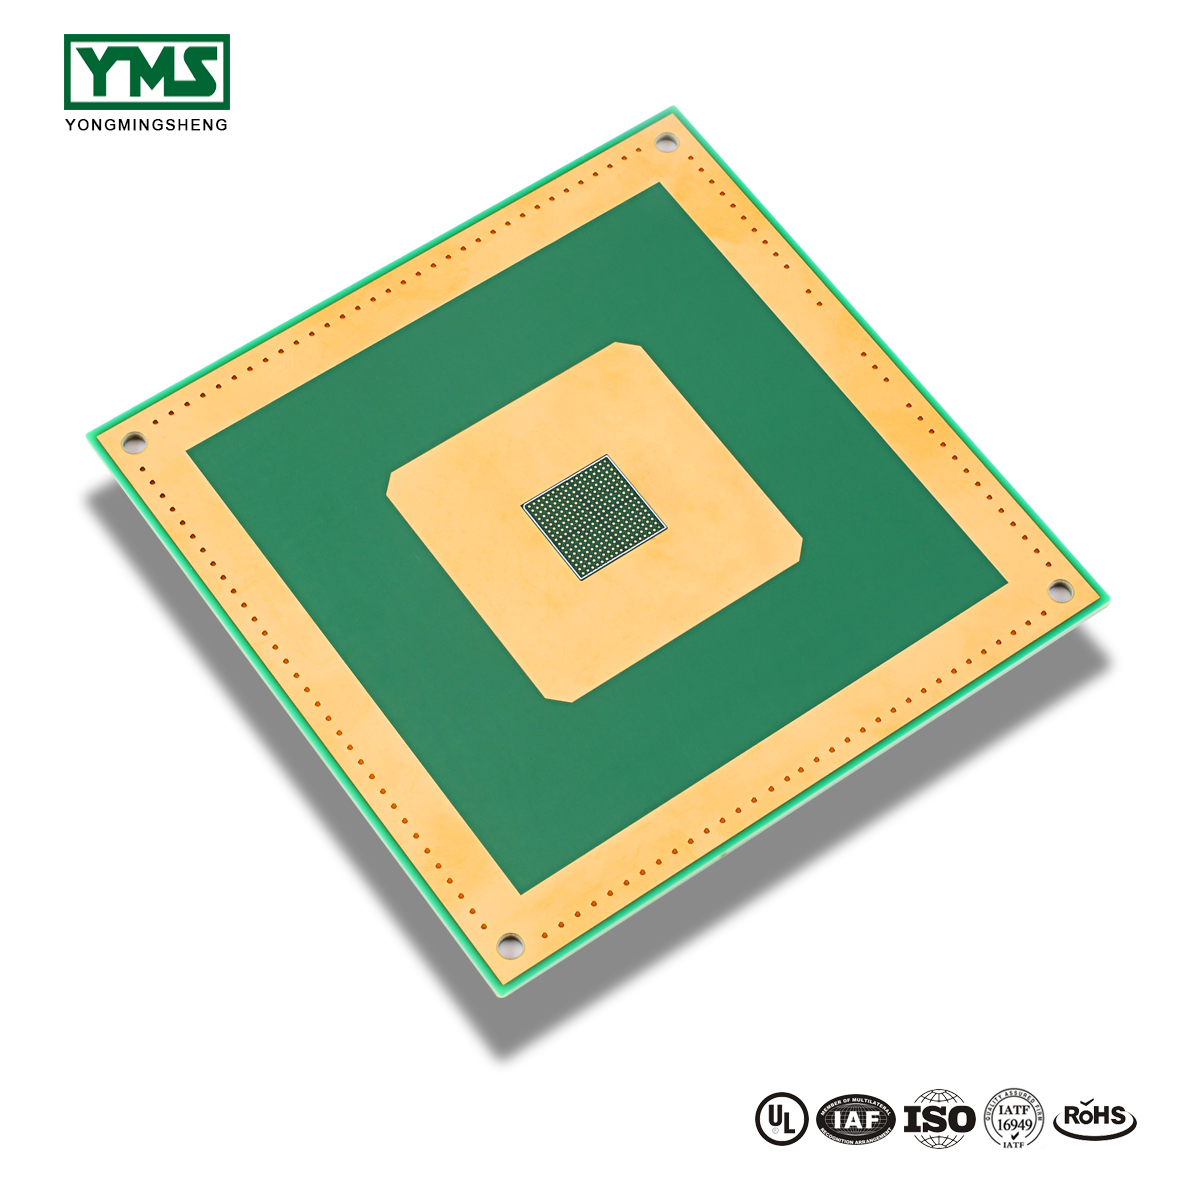 professional factory for Rigid-Flex Printed Circuit Board - 10 Layer (4OZ) High Tg Hard Gold (BGA) Board | YMS PCB – Yongmingsheng